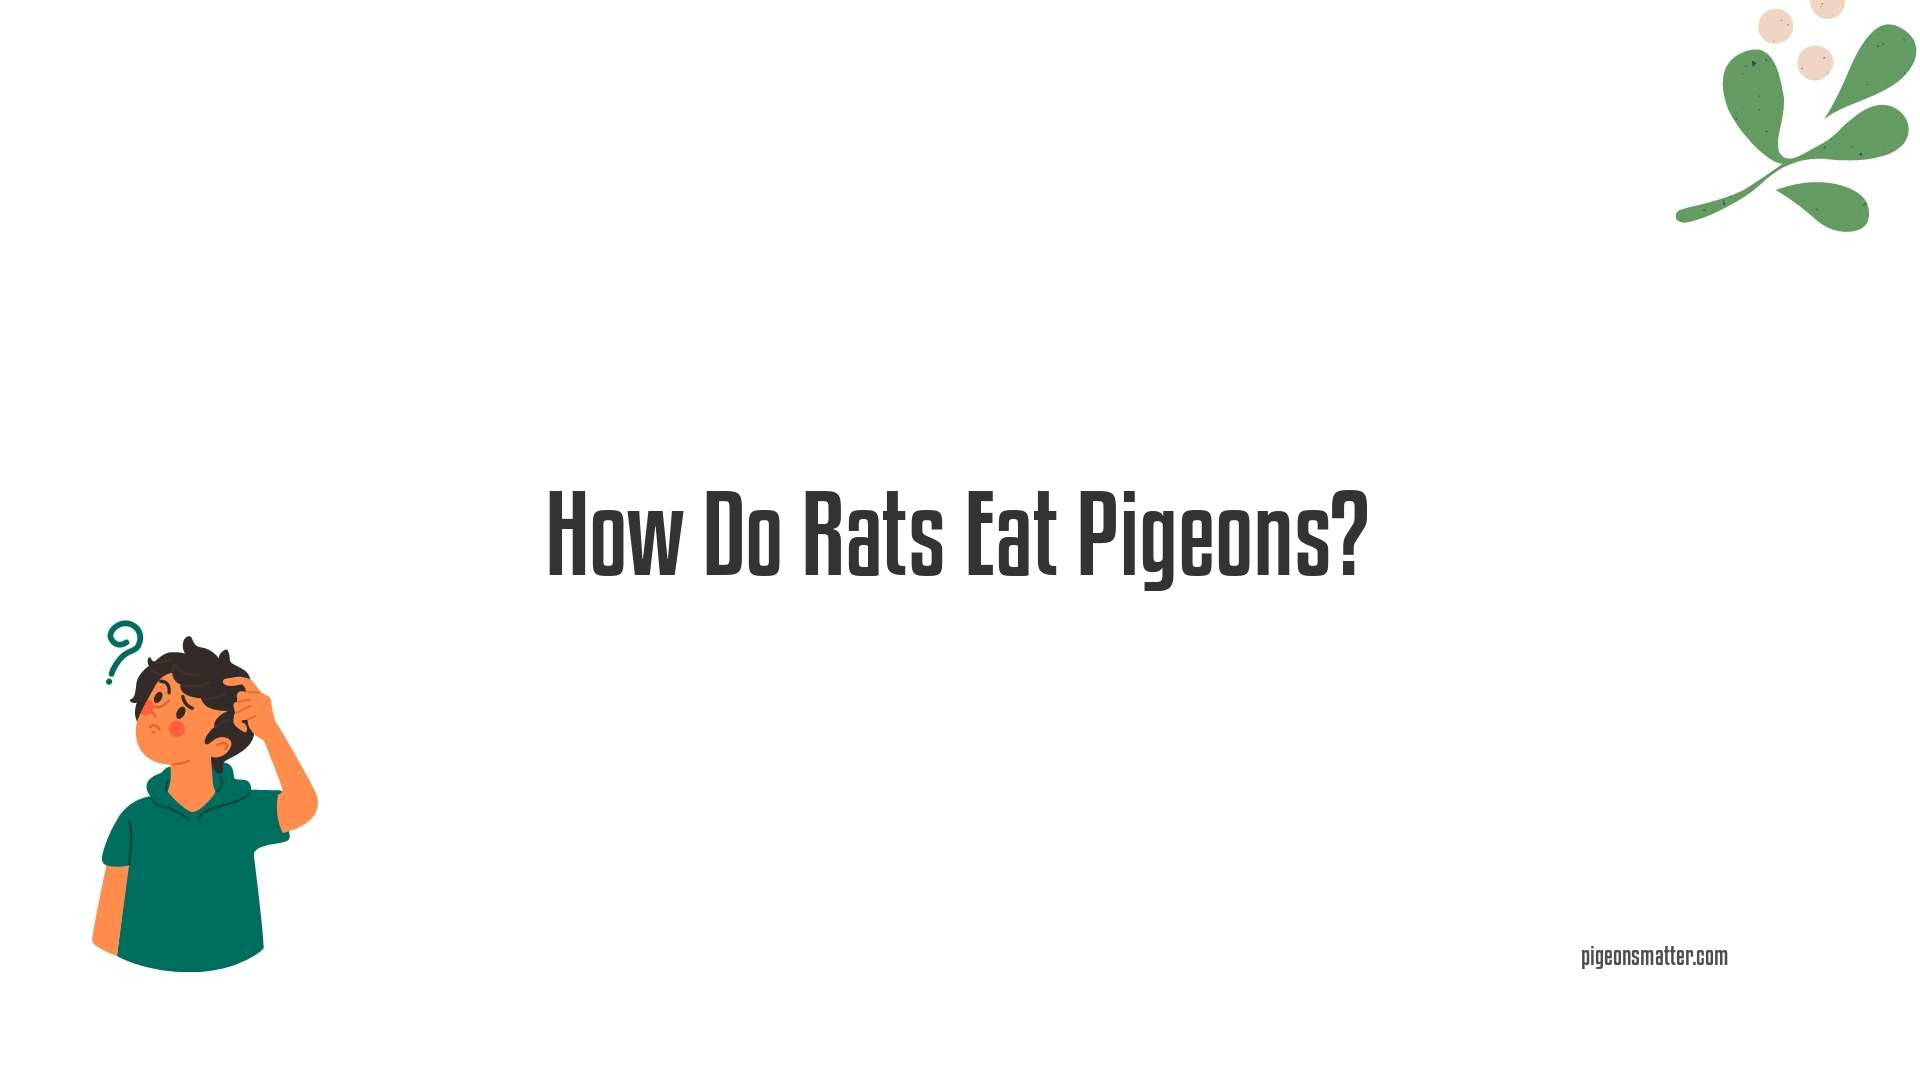 How Do Rats Eat Pigeons?